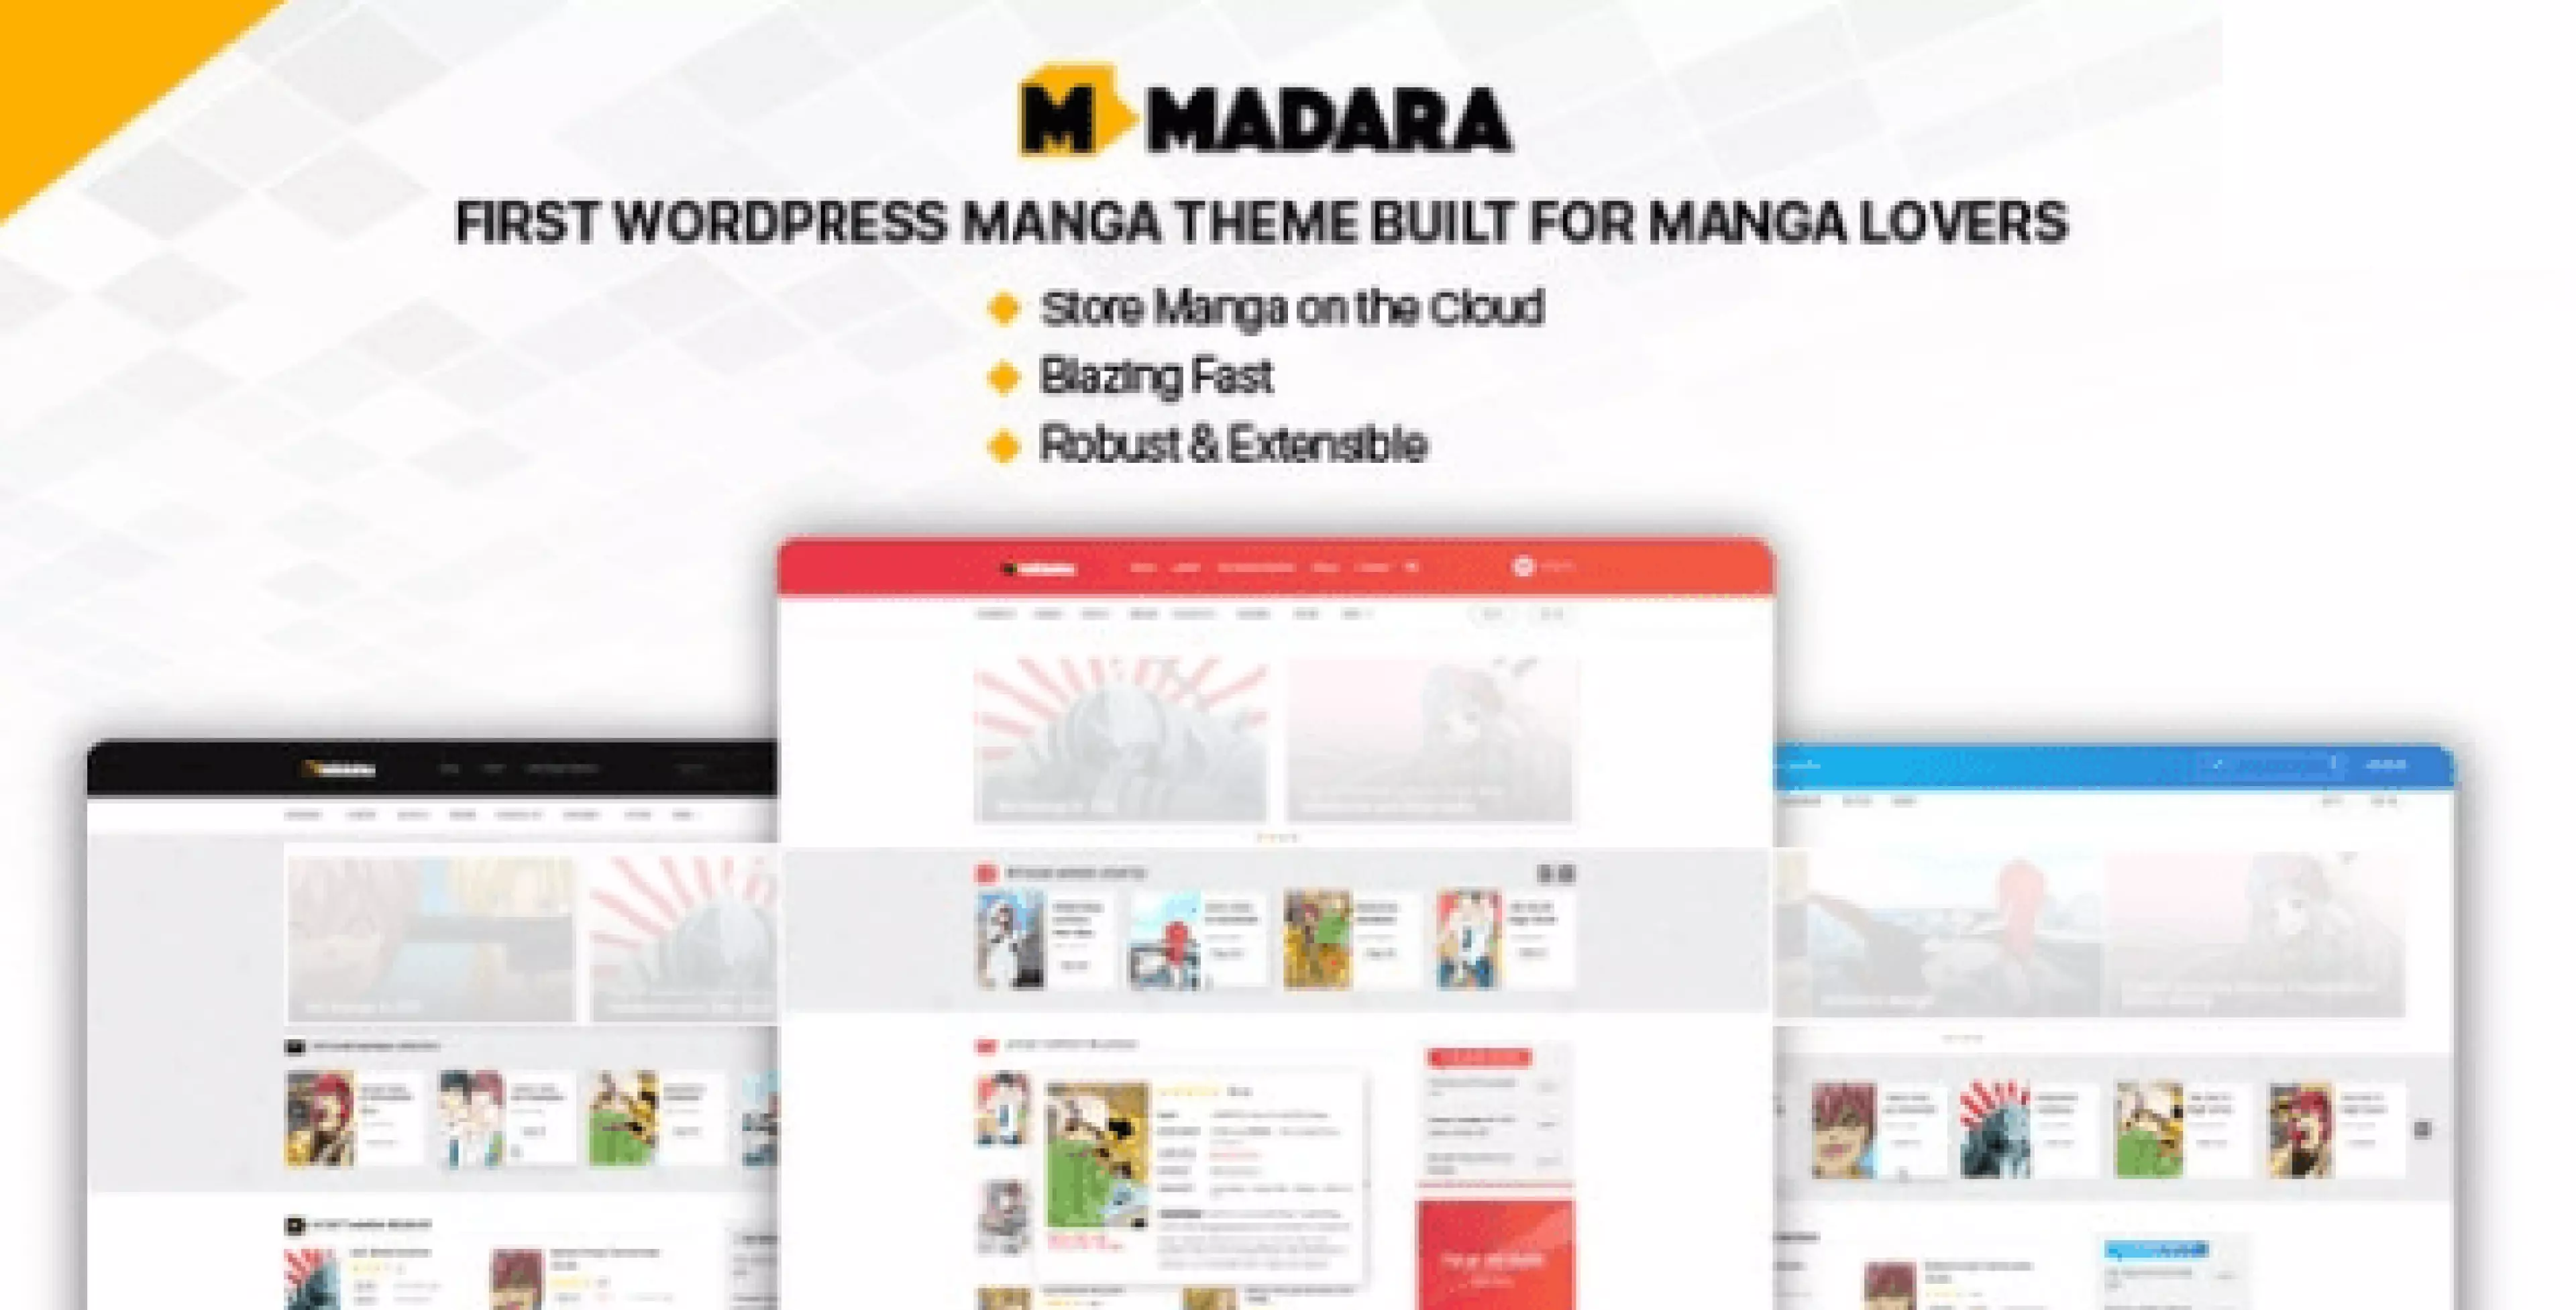 Madara - WordPress Theme for Manga 1.7.3.1